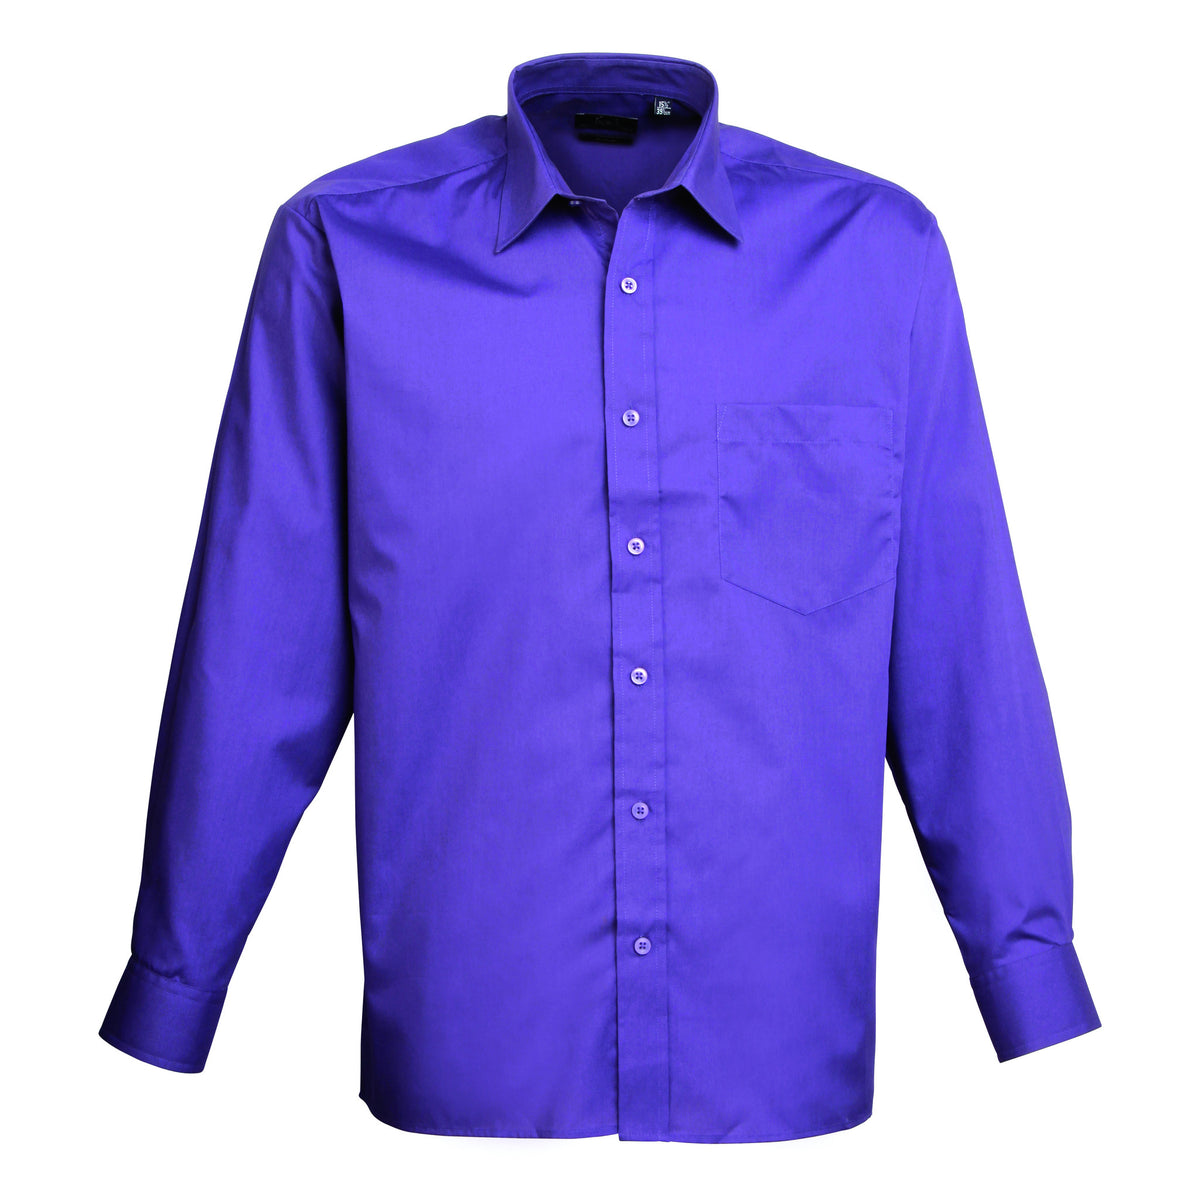 Premier Poplin Shirts (Navy, Lilac, Purple, Violet, Aubergine) - peterdrew.com
 - 9